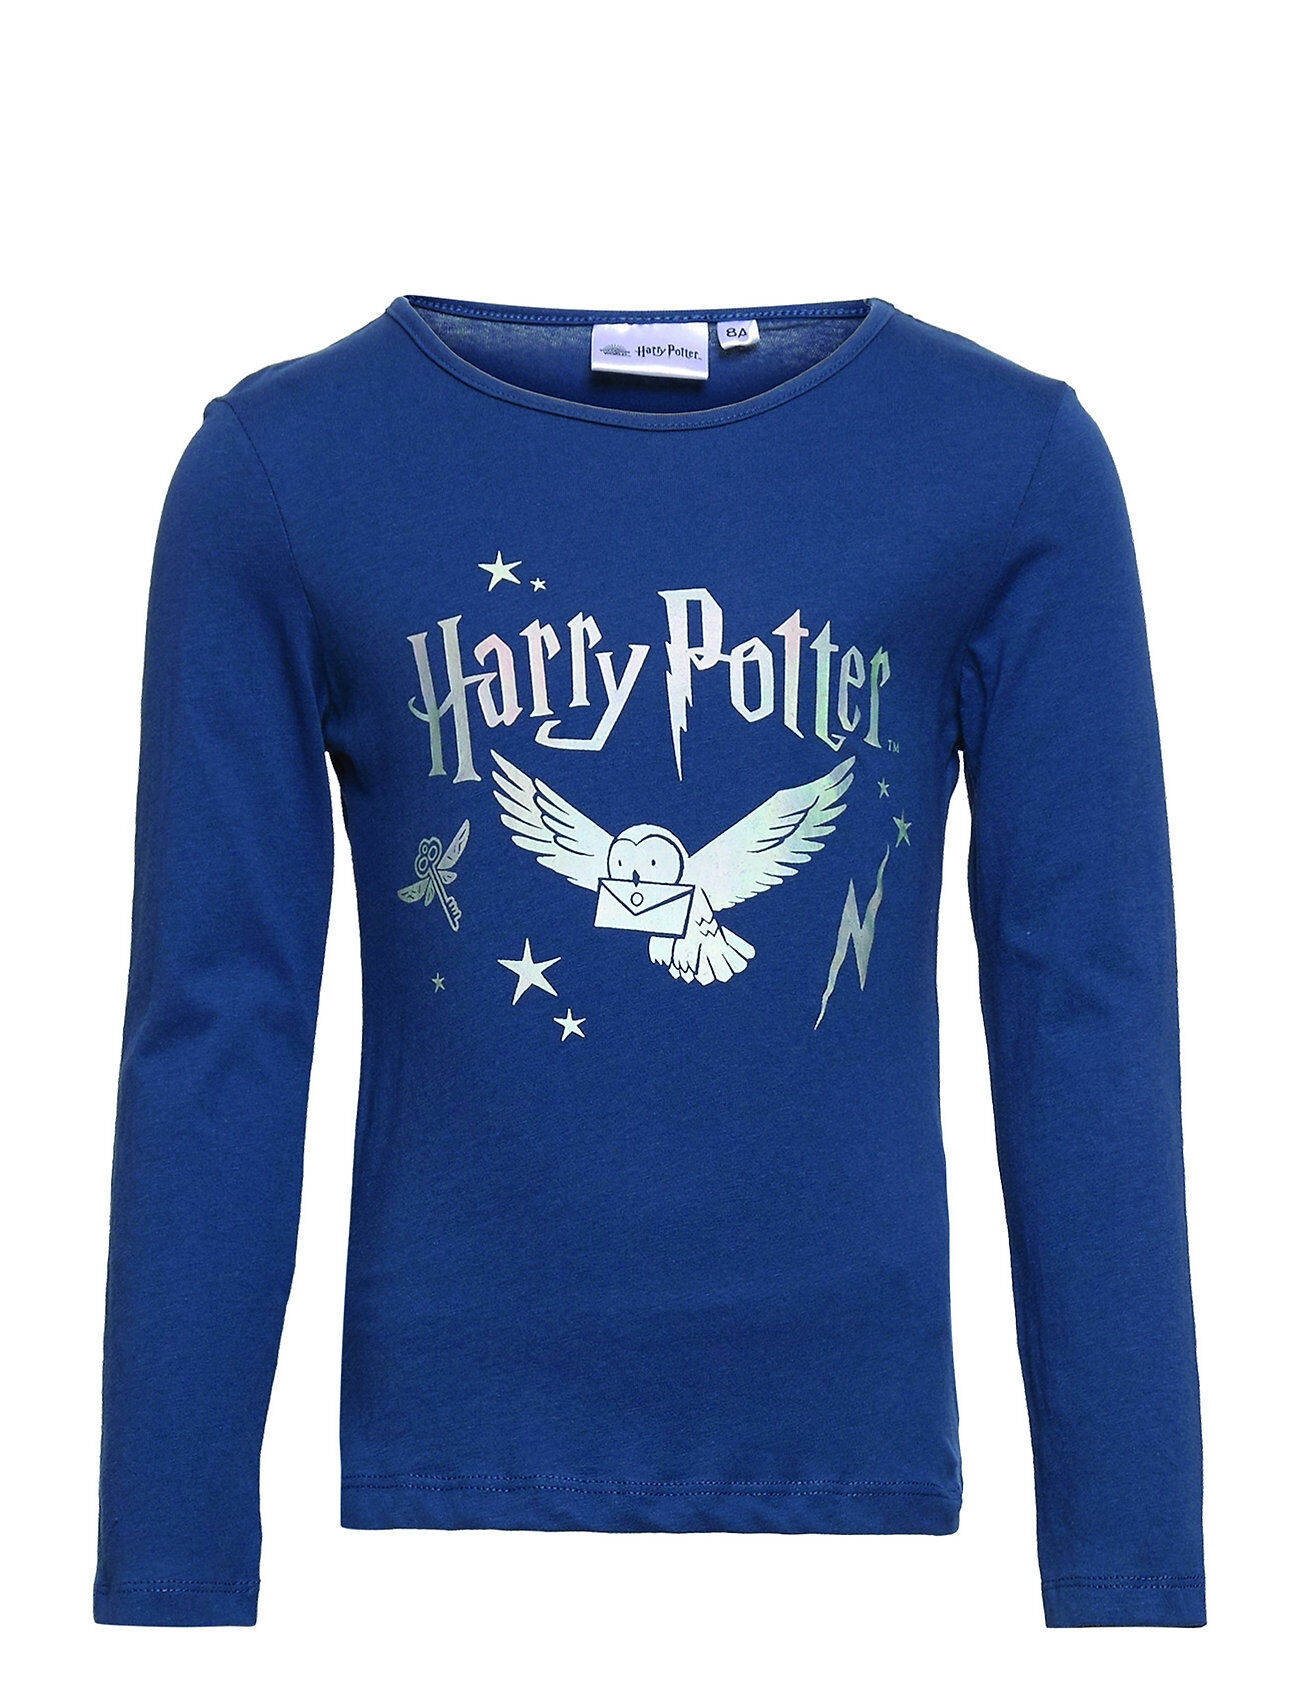 Harry Potter Tshirt T-shirts Long-sleeved T-shirts Blå Harry Potter